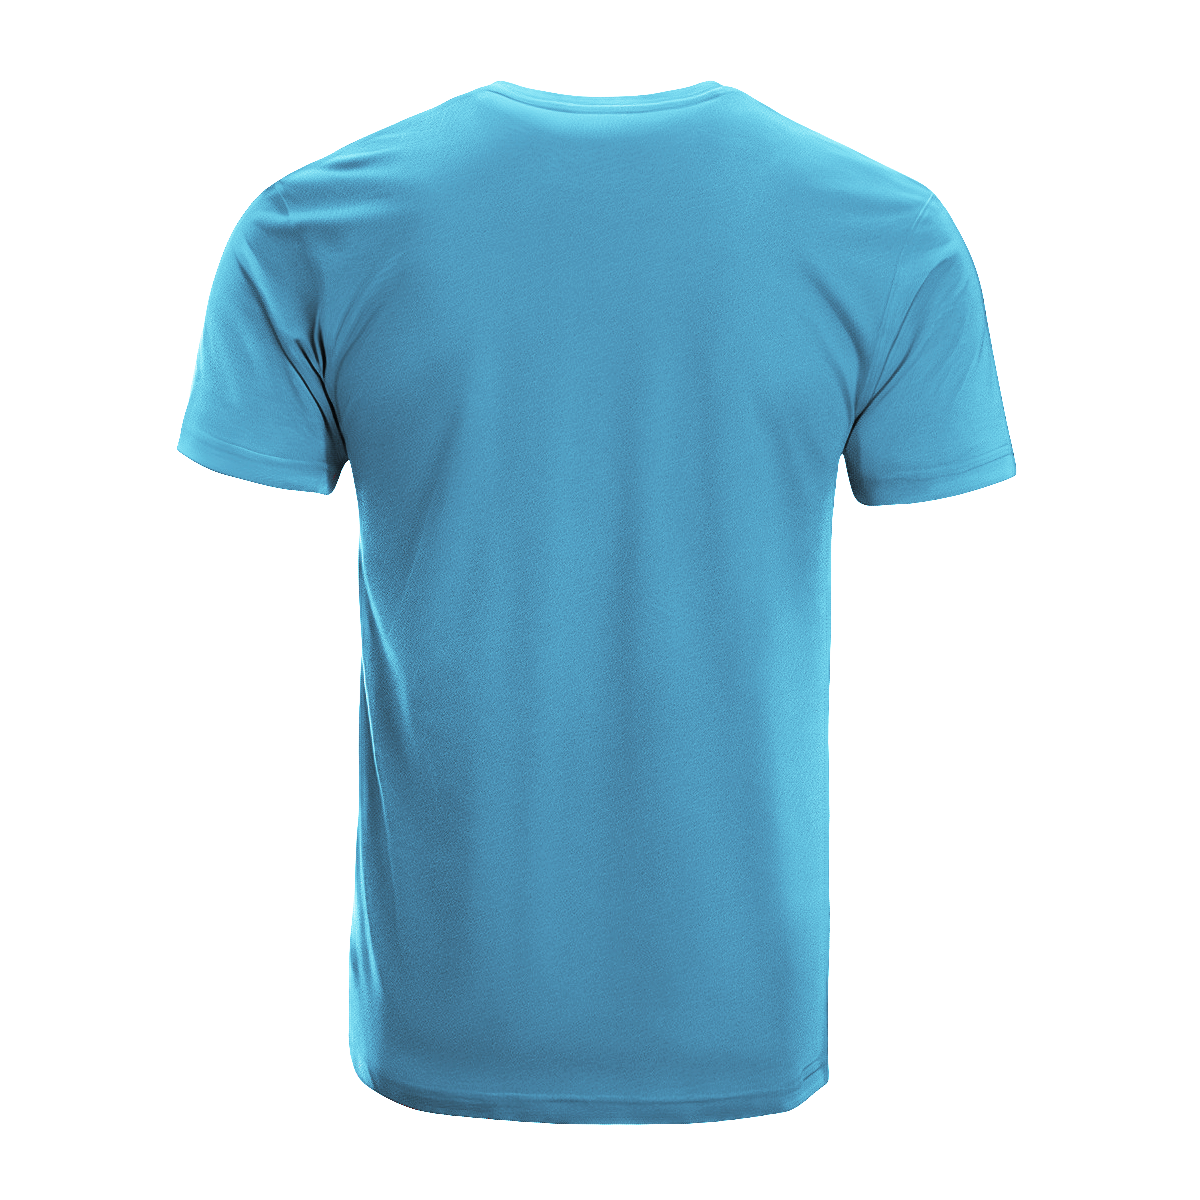 McGowan Tartan Crest T-shirt - I'm not yelling style